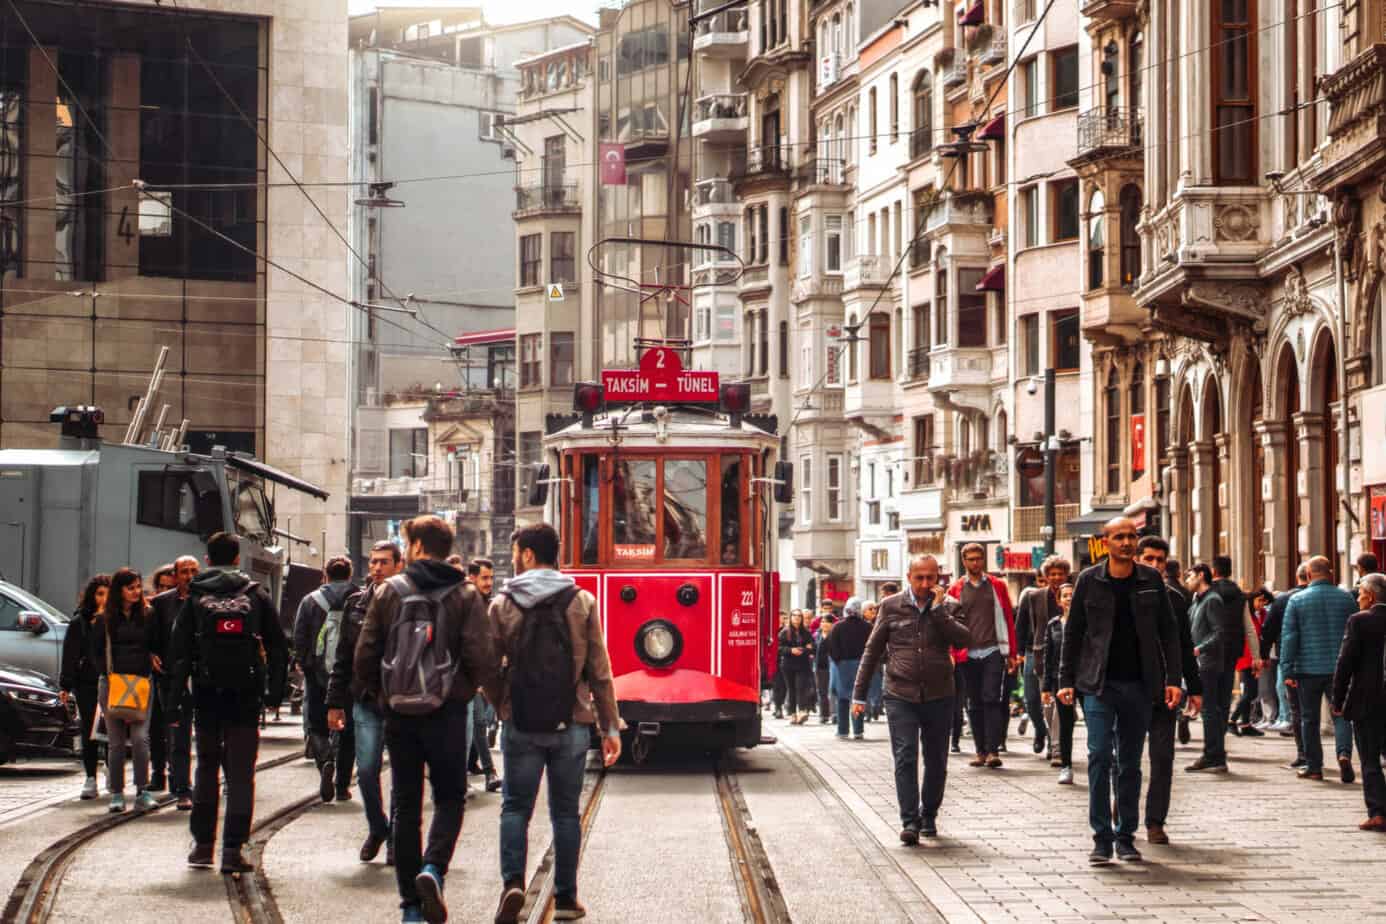 Istanbul tram